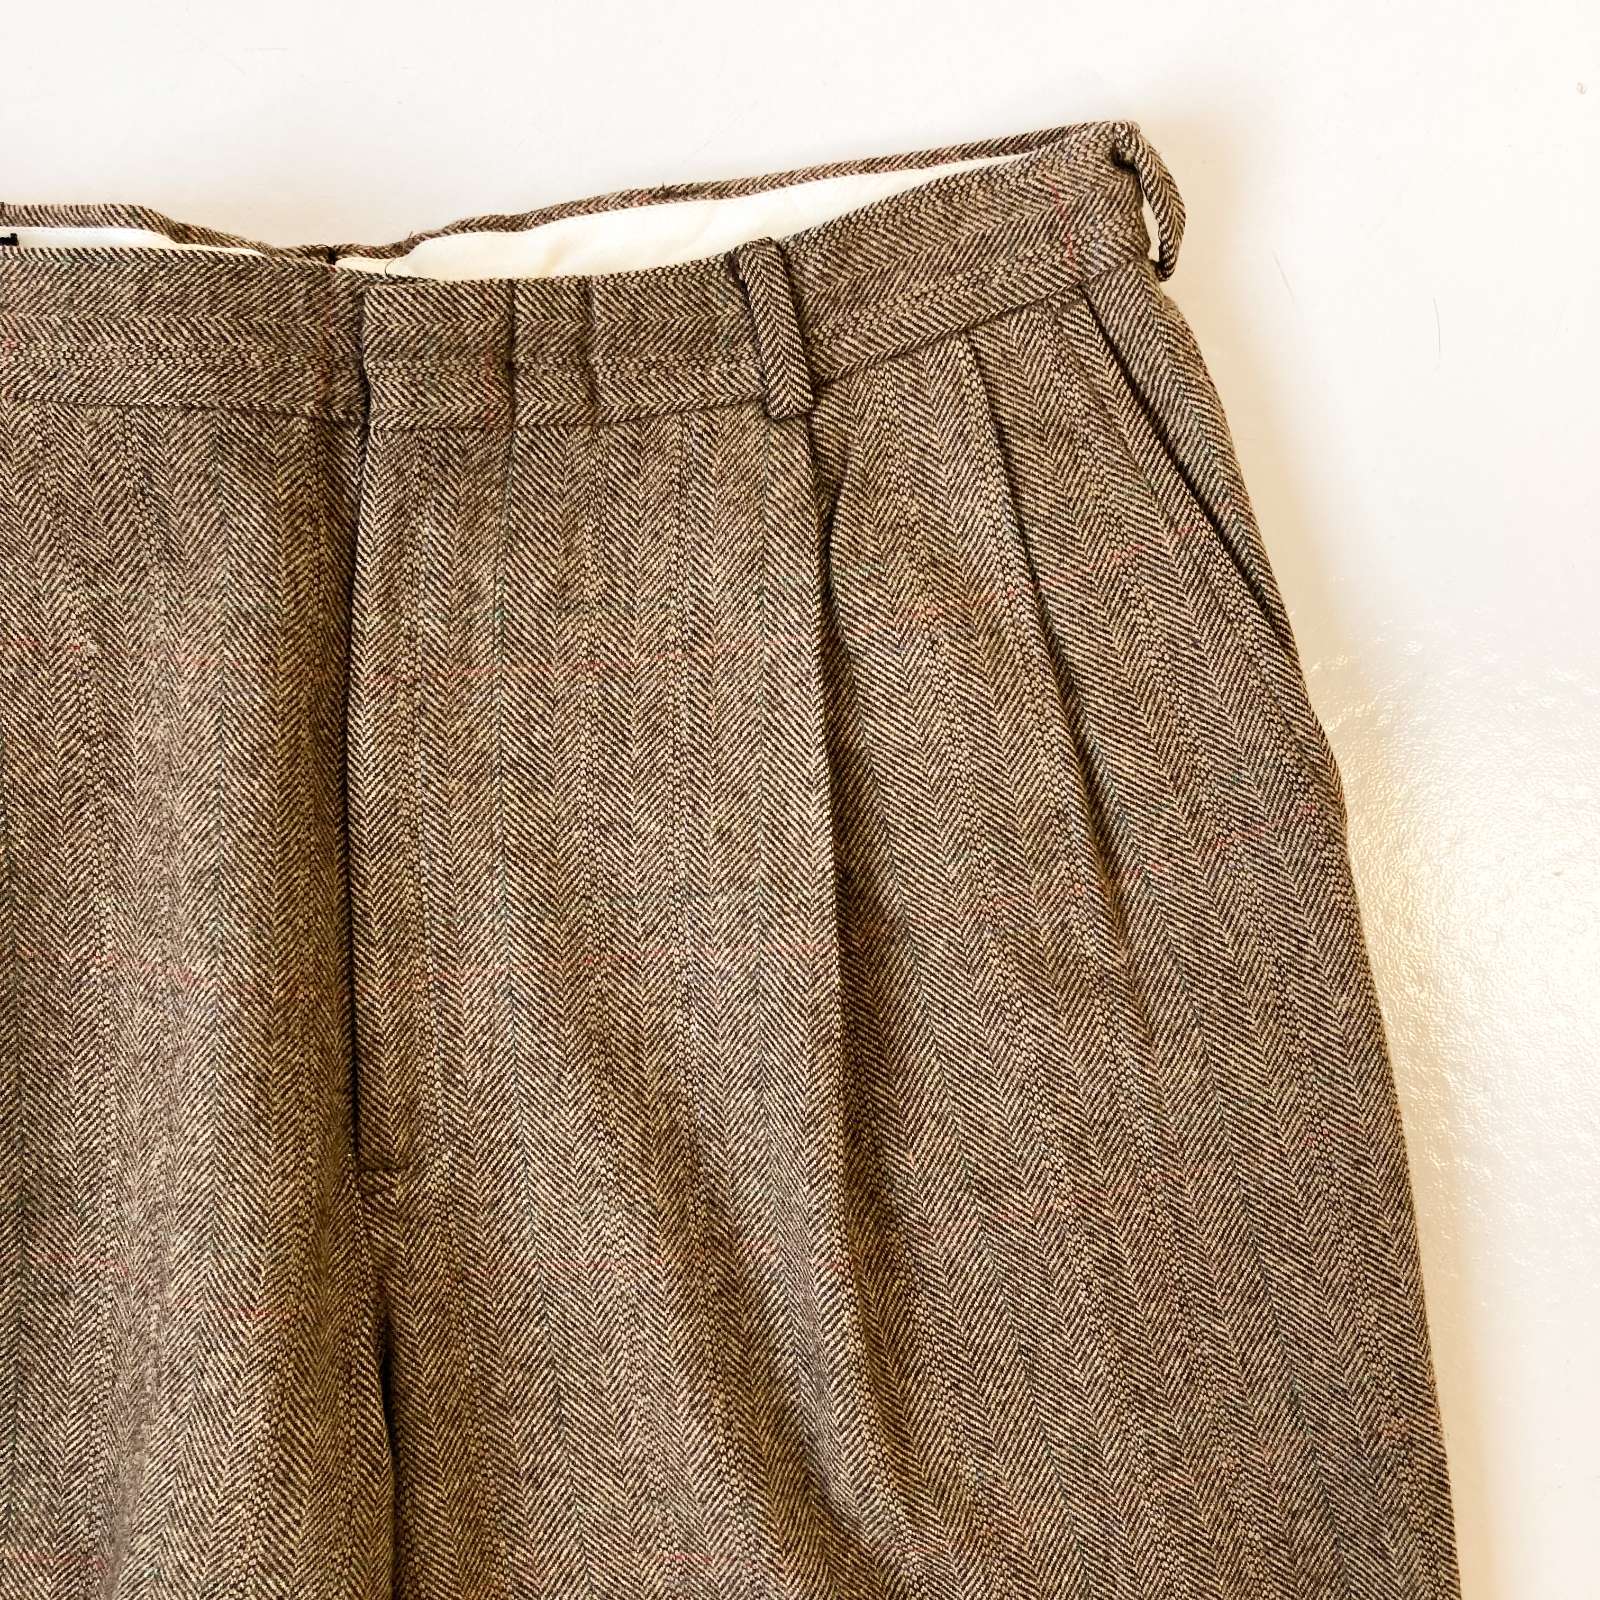 1980s brown stripe wool slacks ヘリンボーン - スラックス